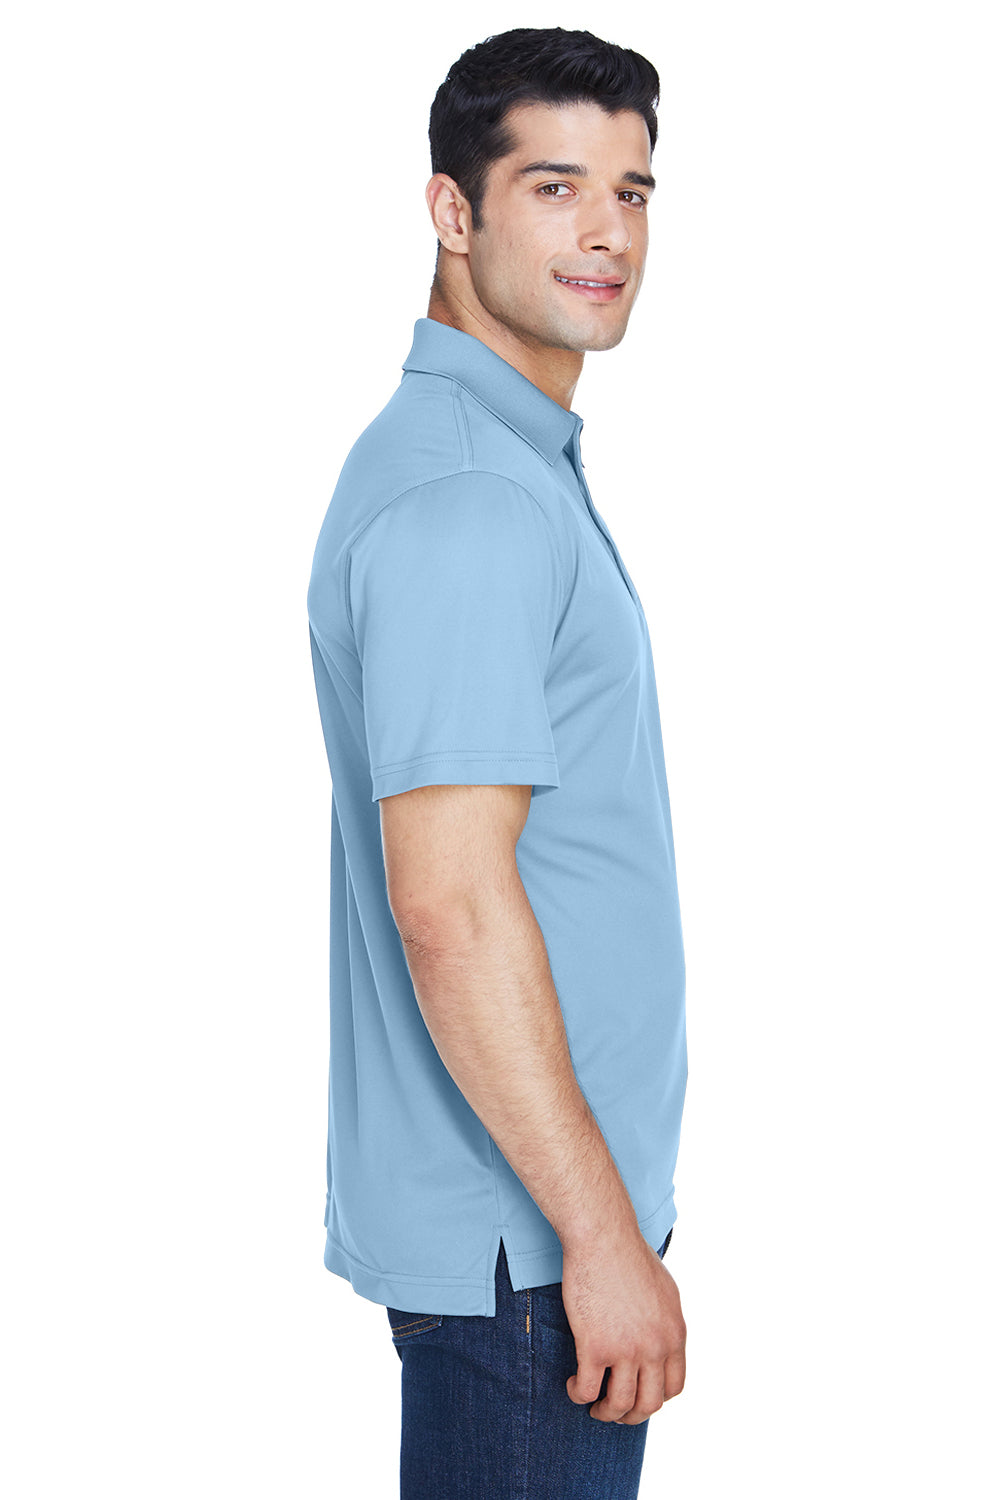 Harriton M315 Mens Polytech Moisture Wicking Short Sleeve Polo Shirt Light Blue Side